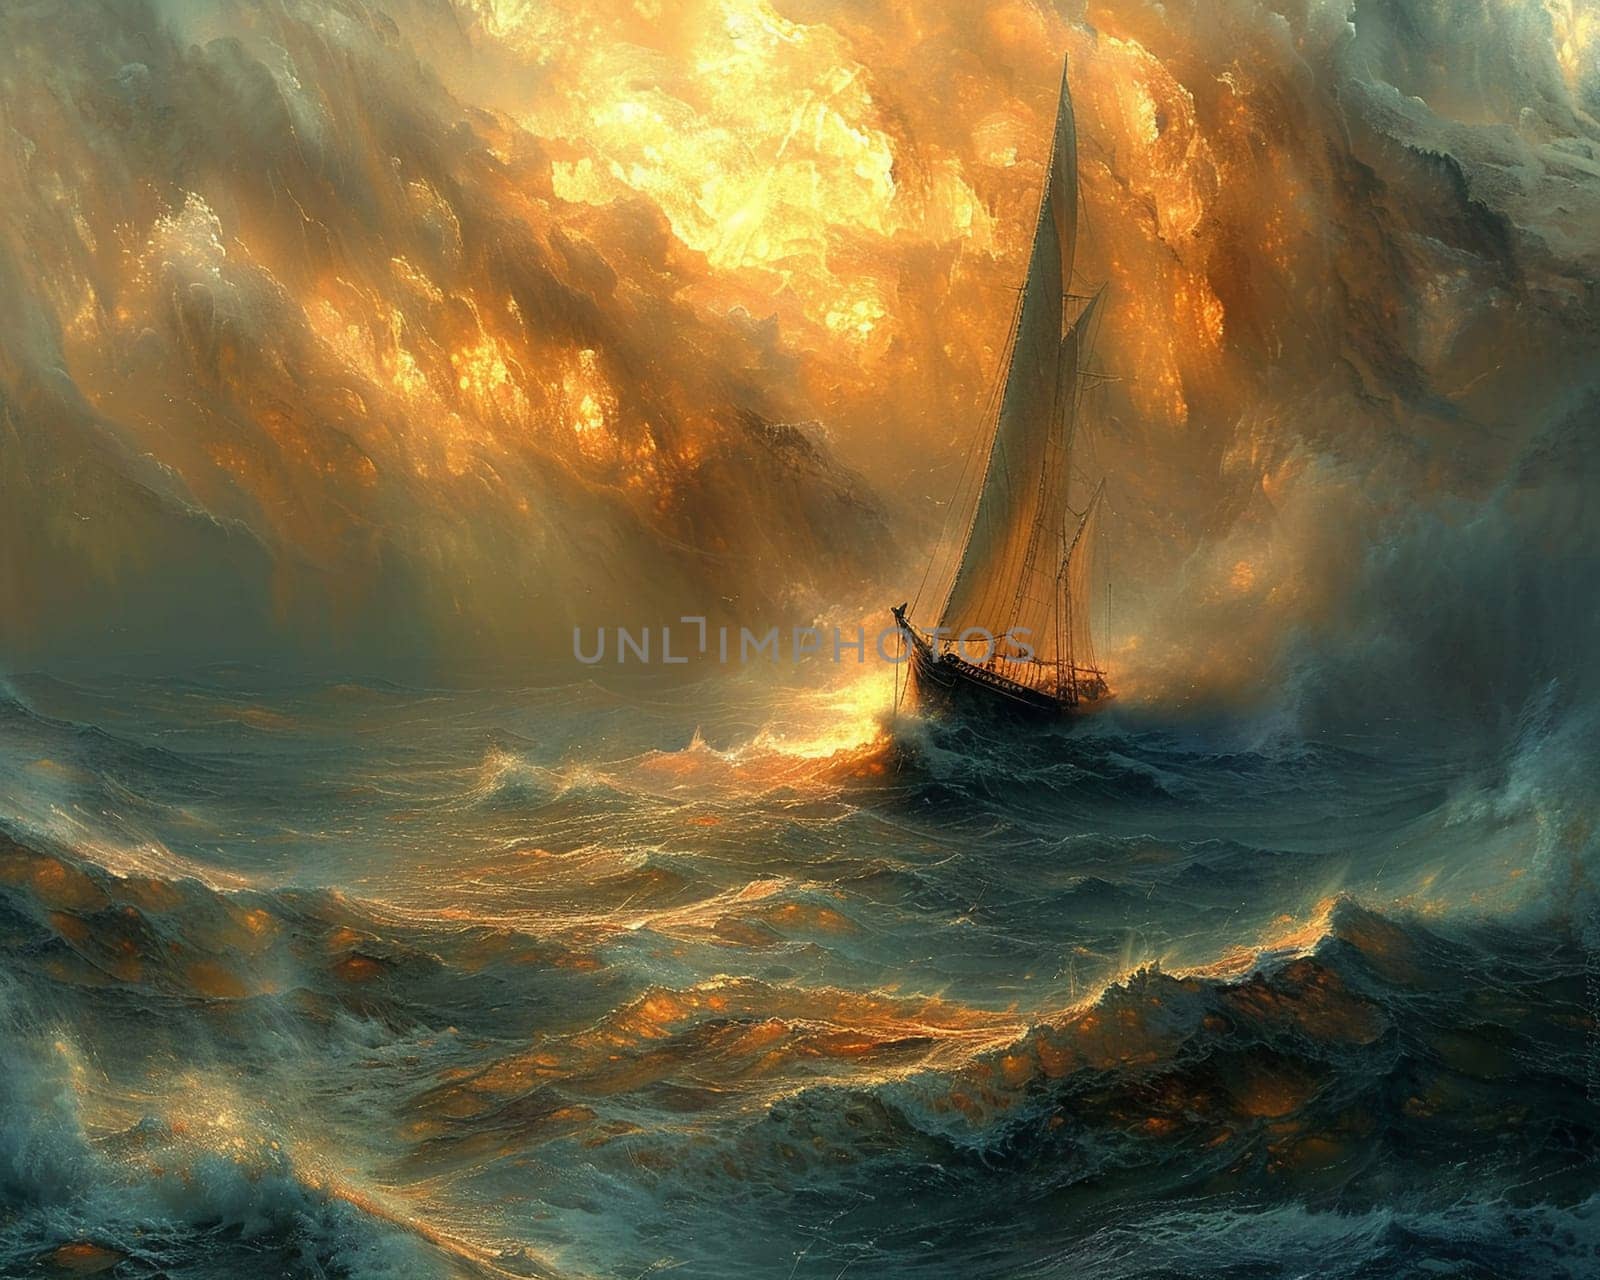 Seafarer adrift in an ocean of dreams by Benzoix